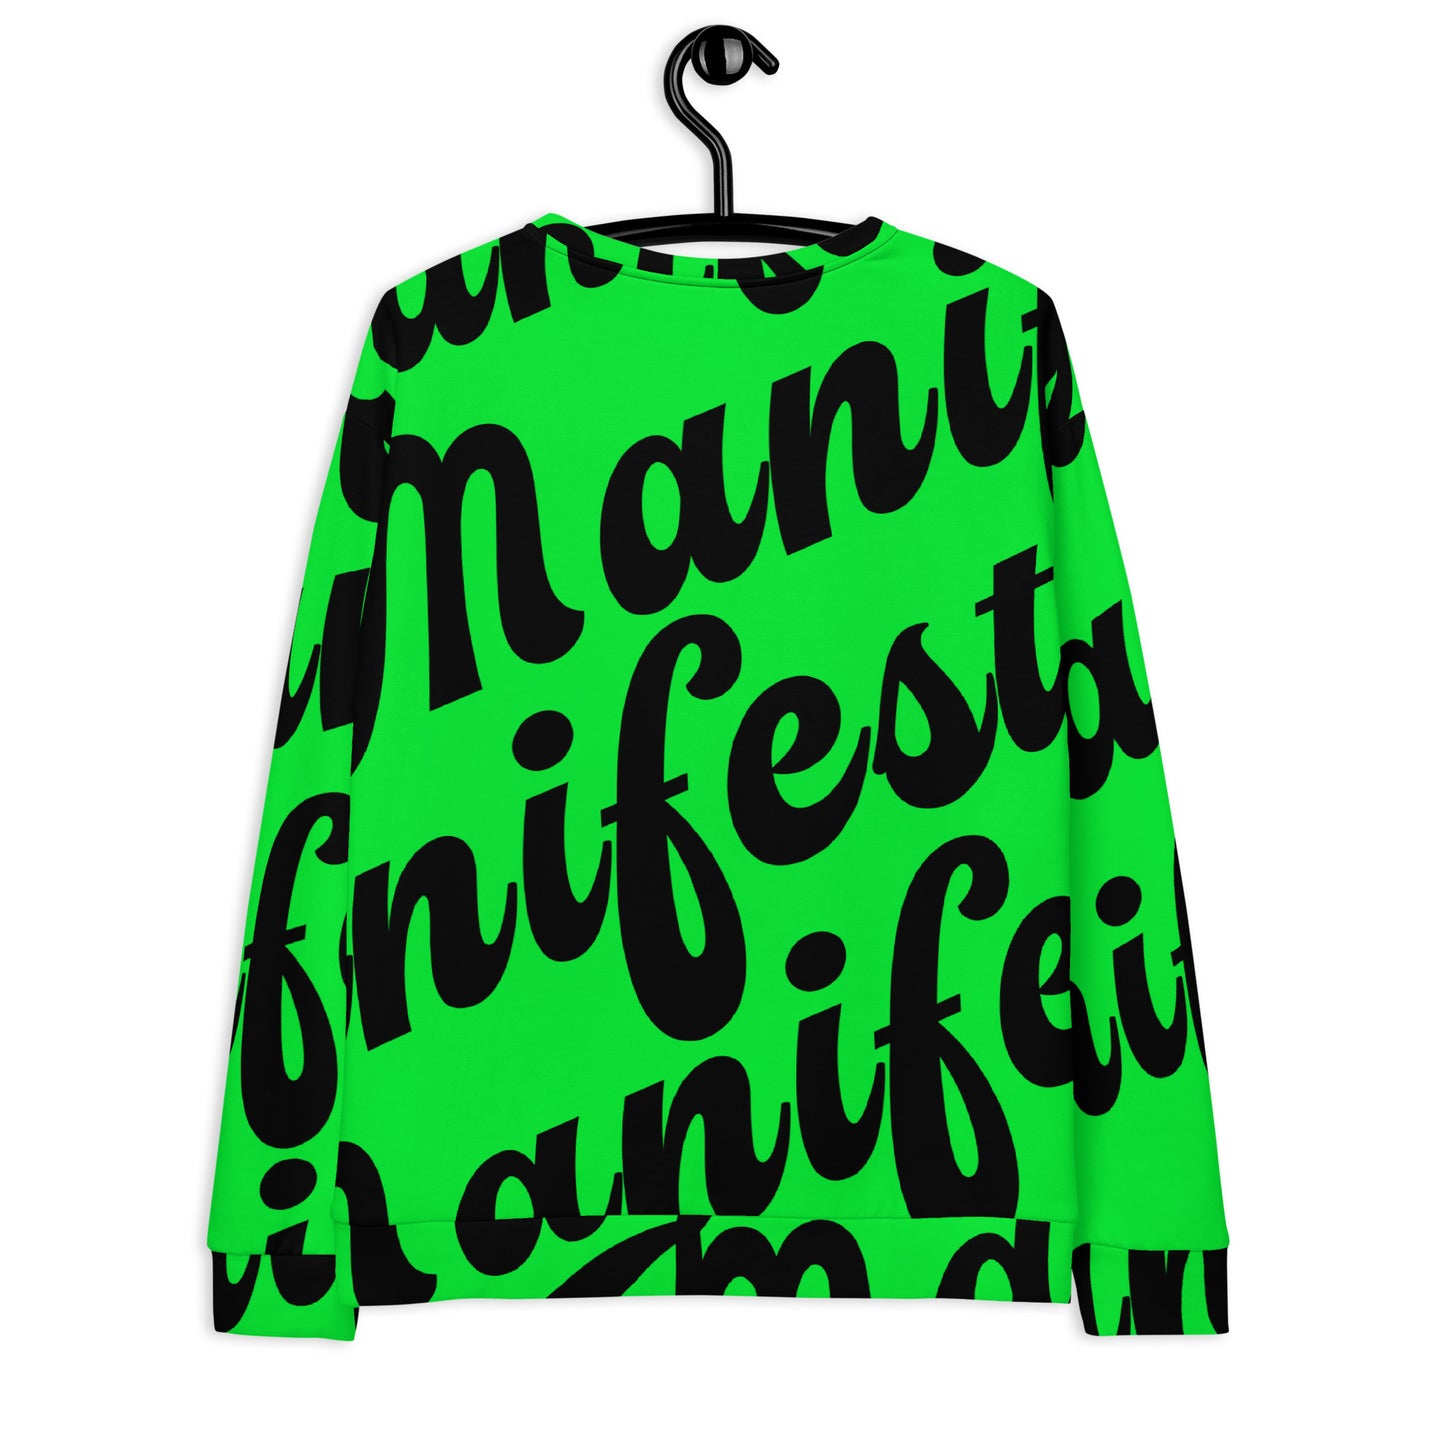 Manifested Glow (green) Unisex Sweatshirt